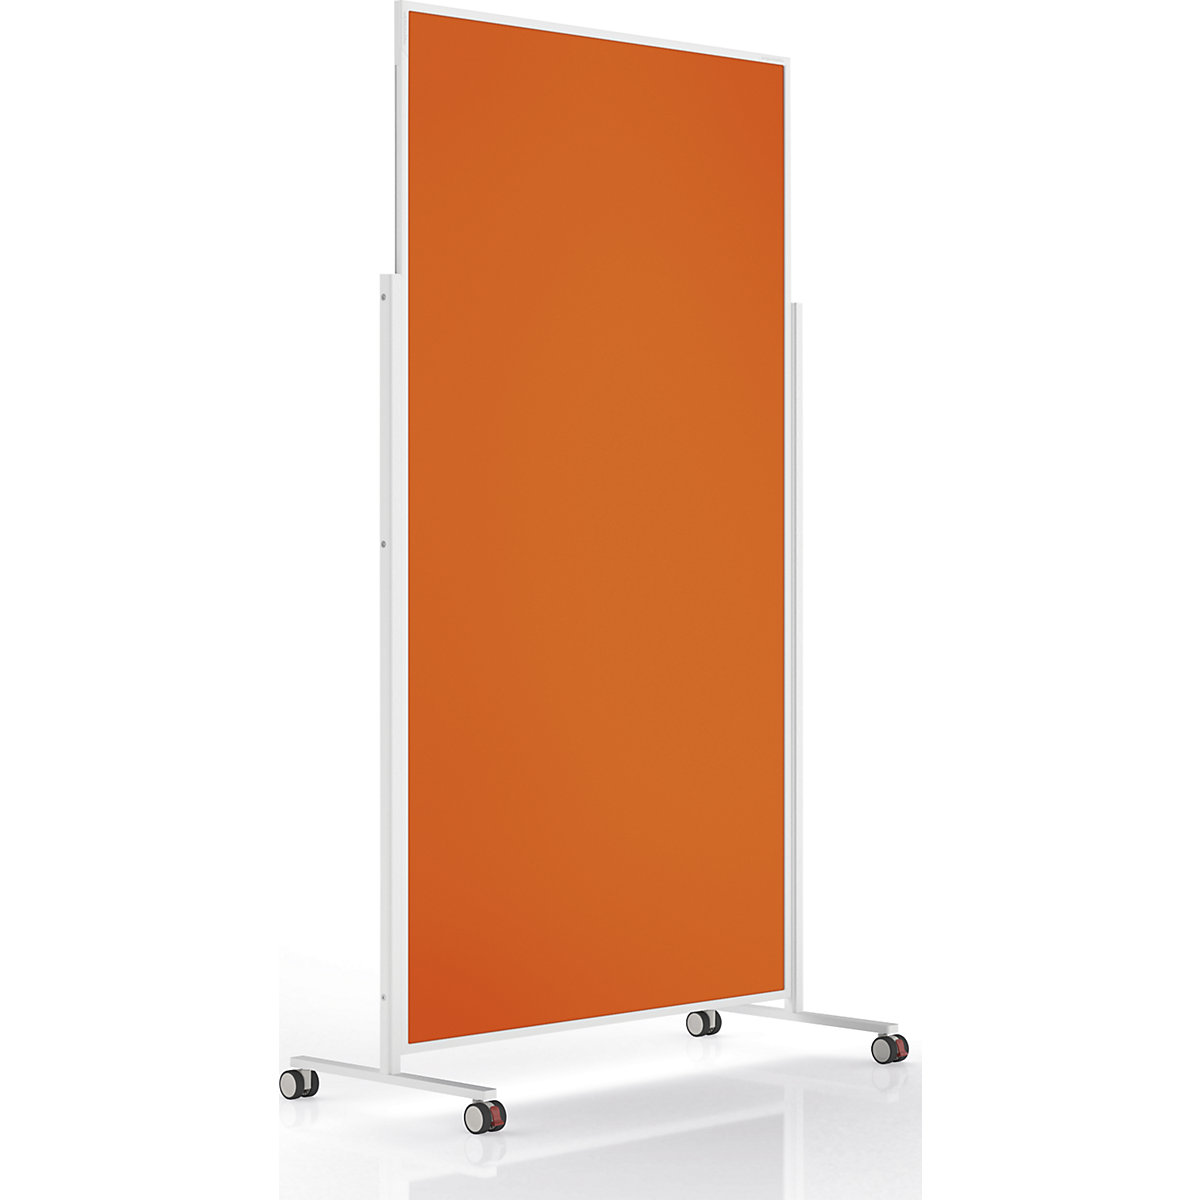 Design-Moderationstafel VarioPin magnetoplan, Tafelformat 1800 x 1000 mm, Filz, orange